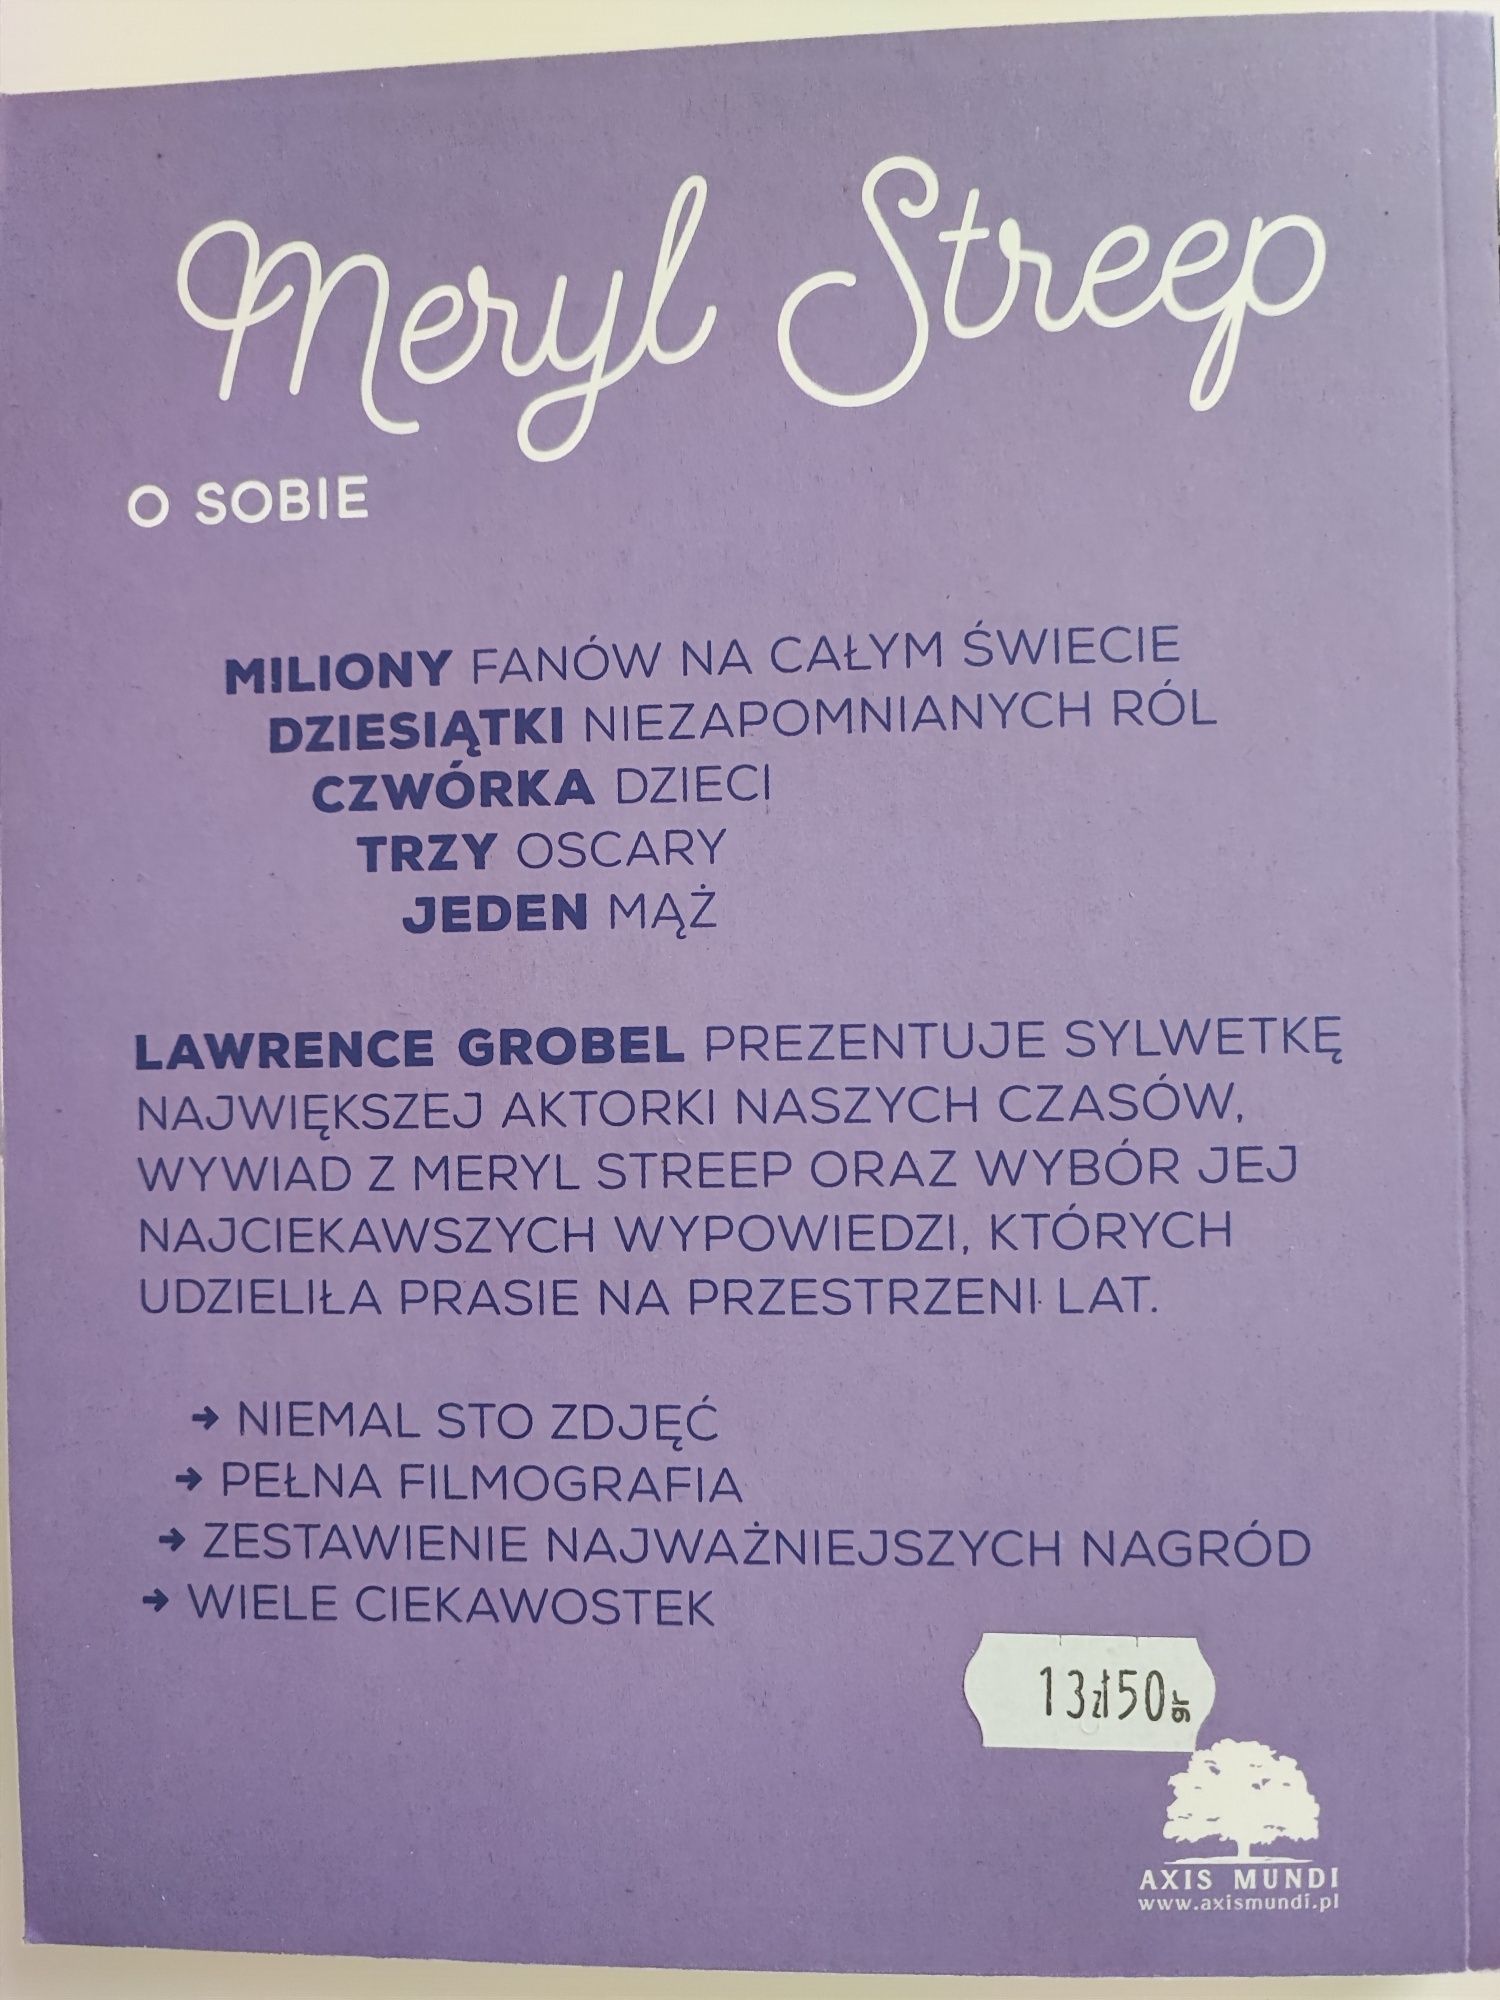 Lawrence Grobel Meryl Streep o sobie